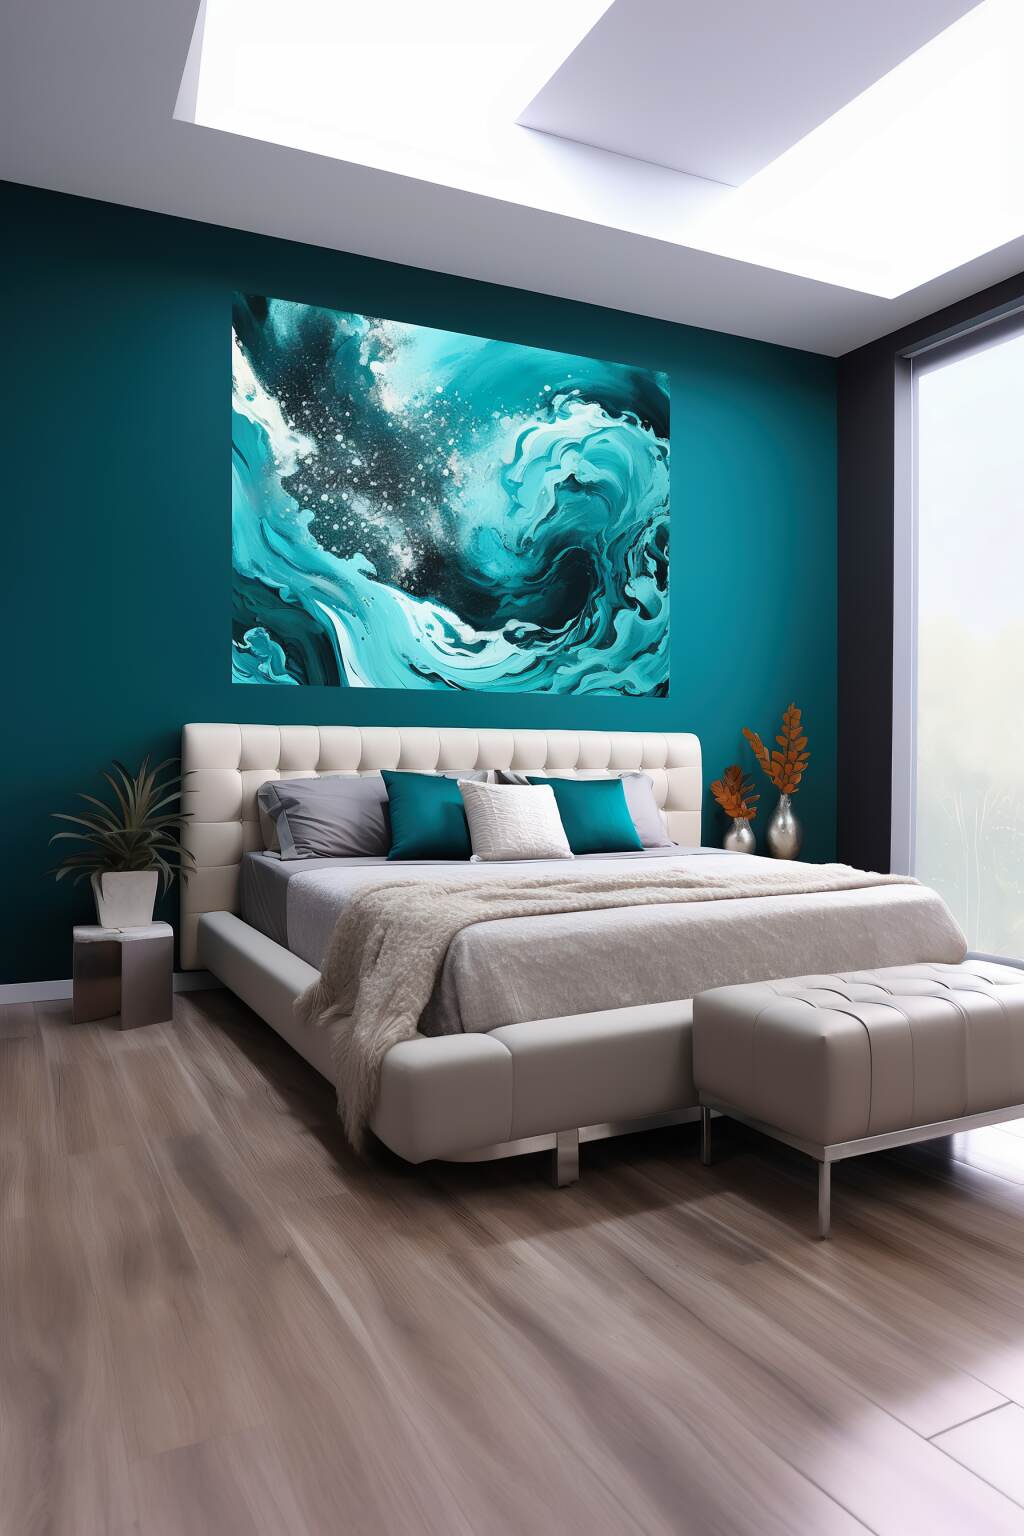 Artistic Teal Bedroom